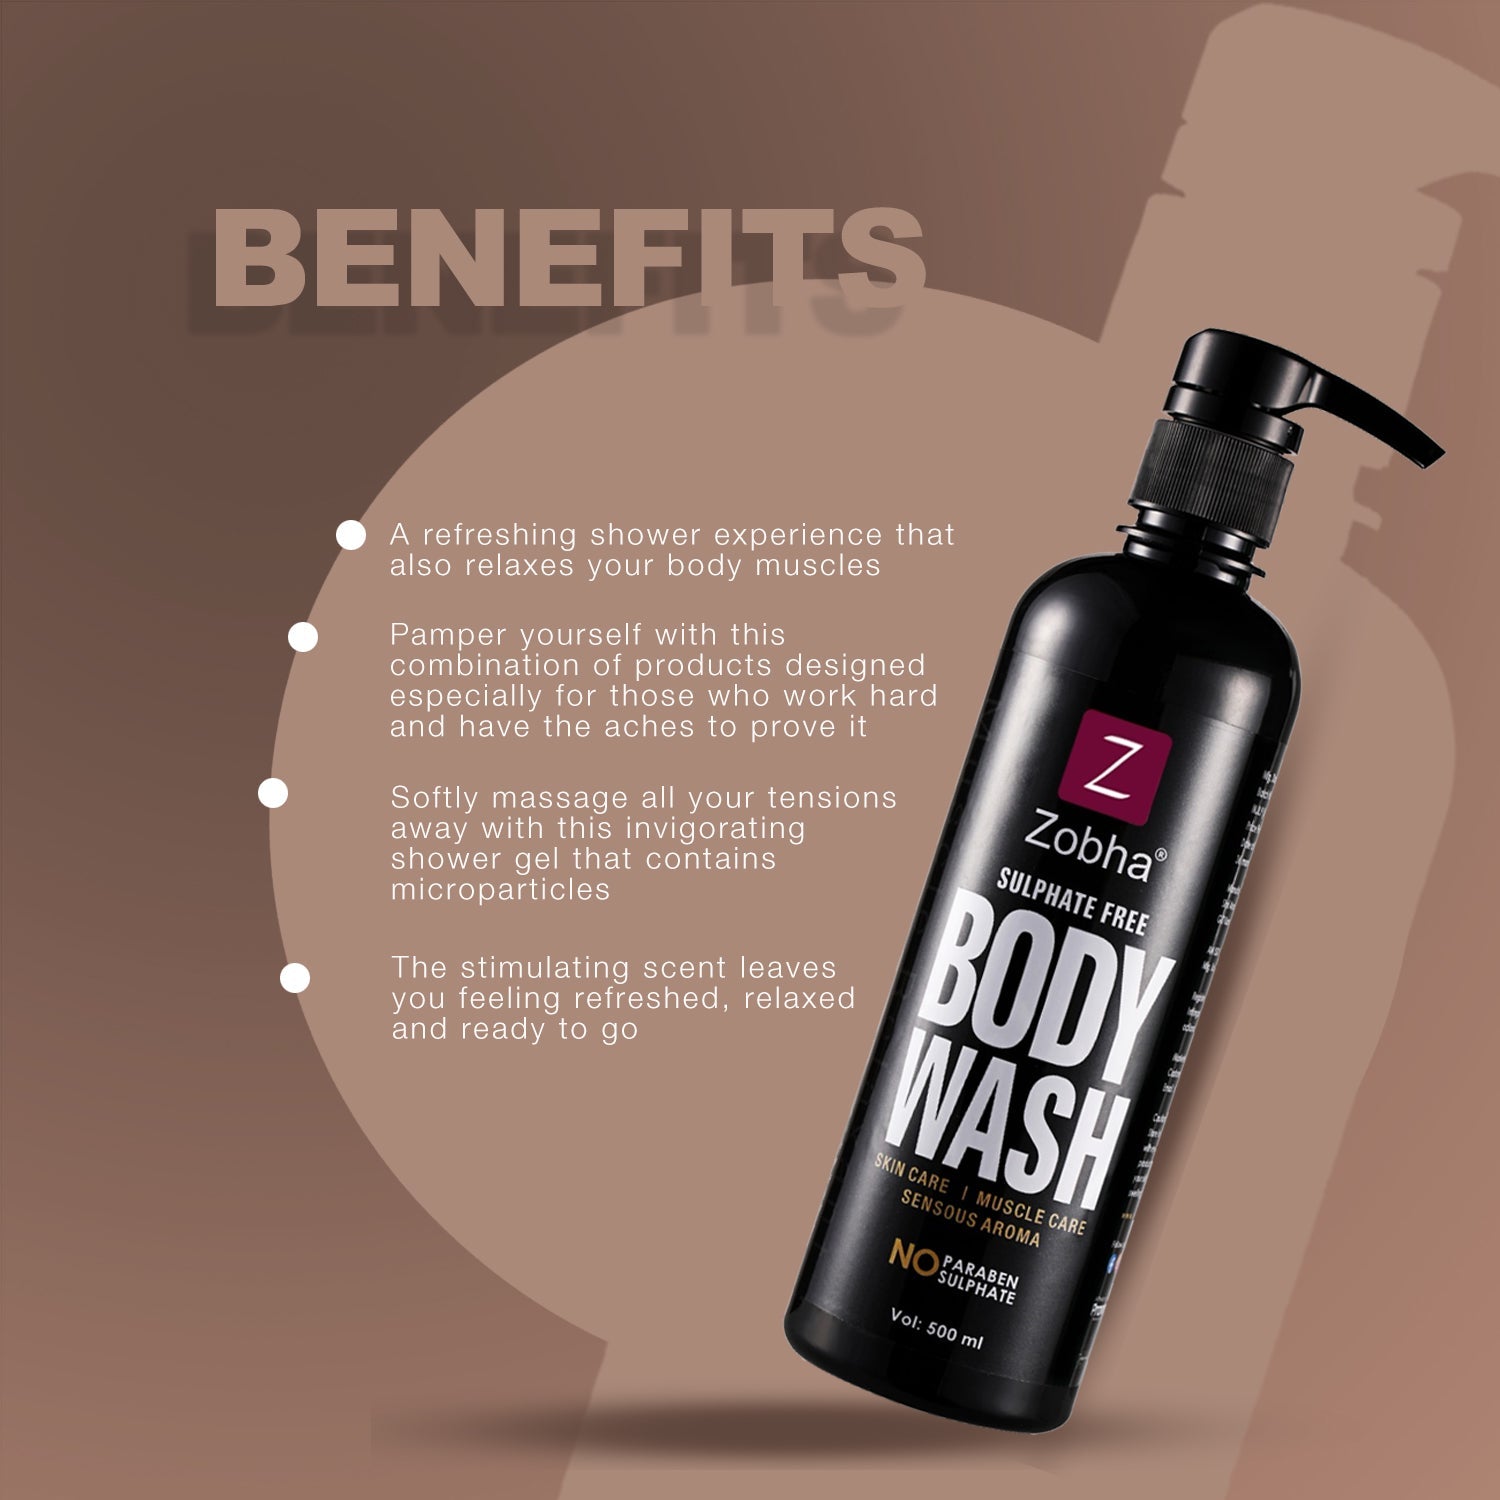 Zobha Muscle Relaxant Body Wash - 500ml